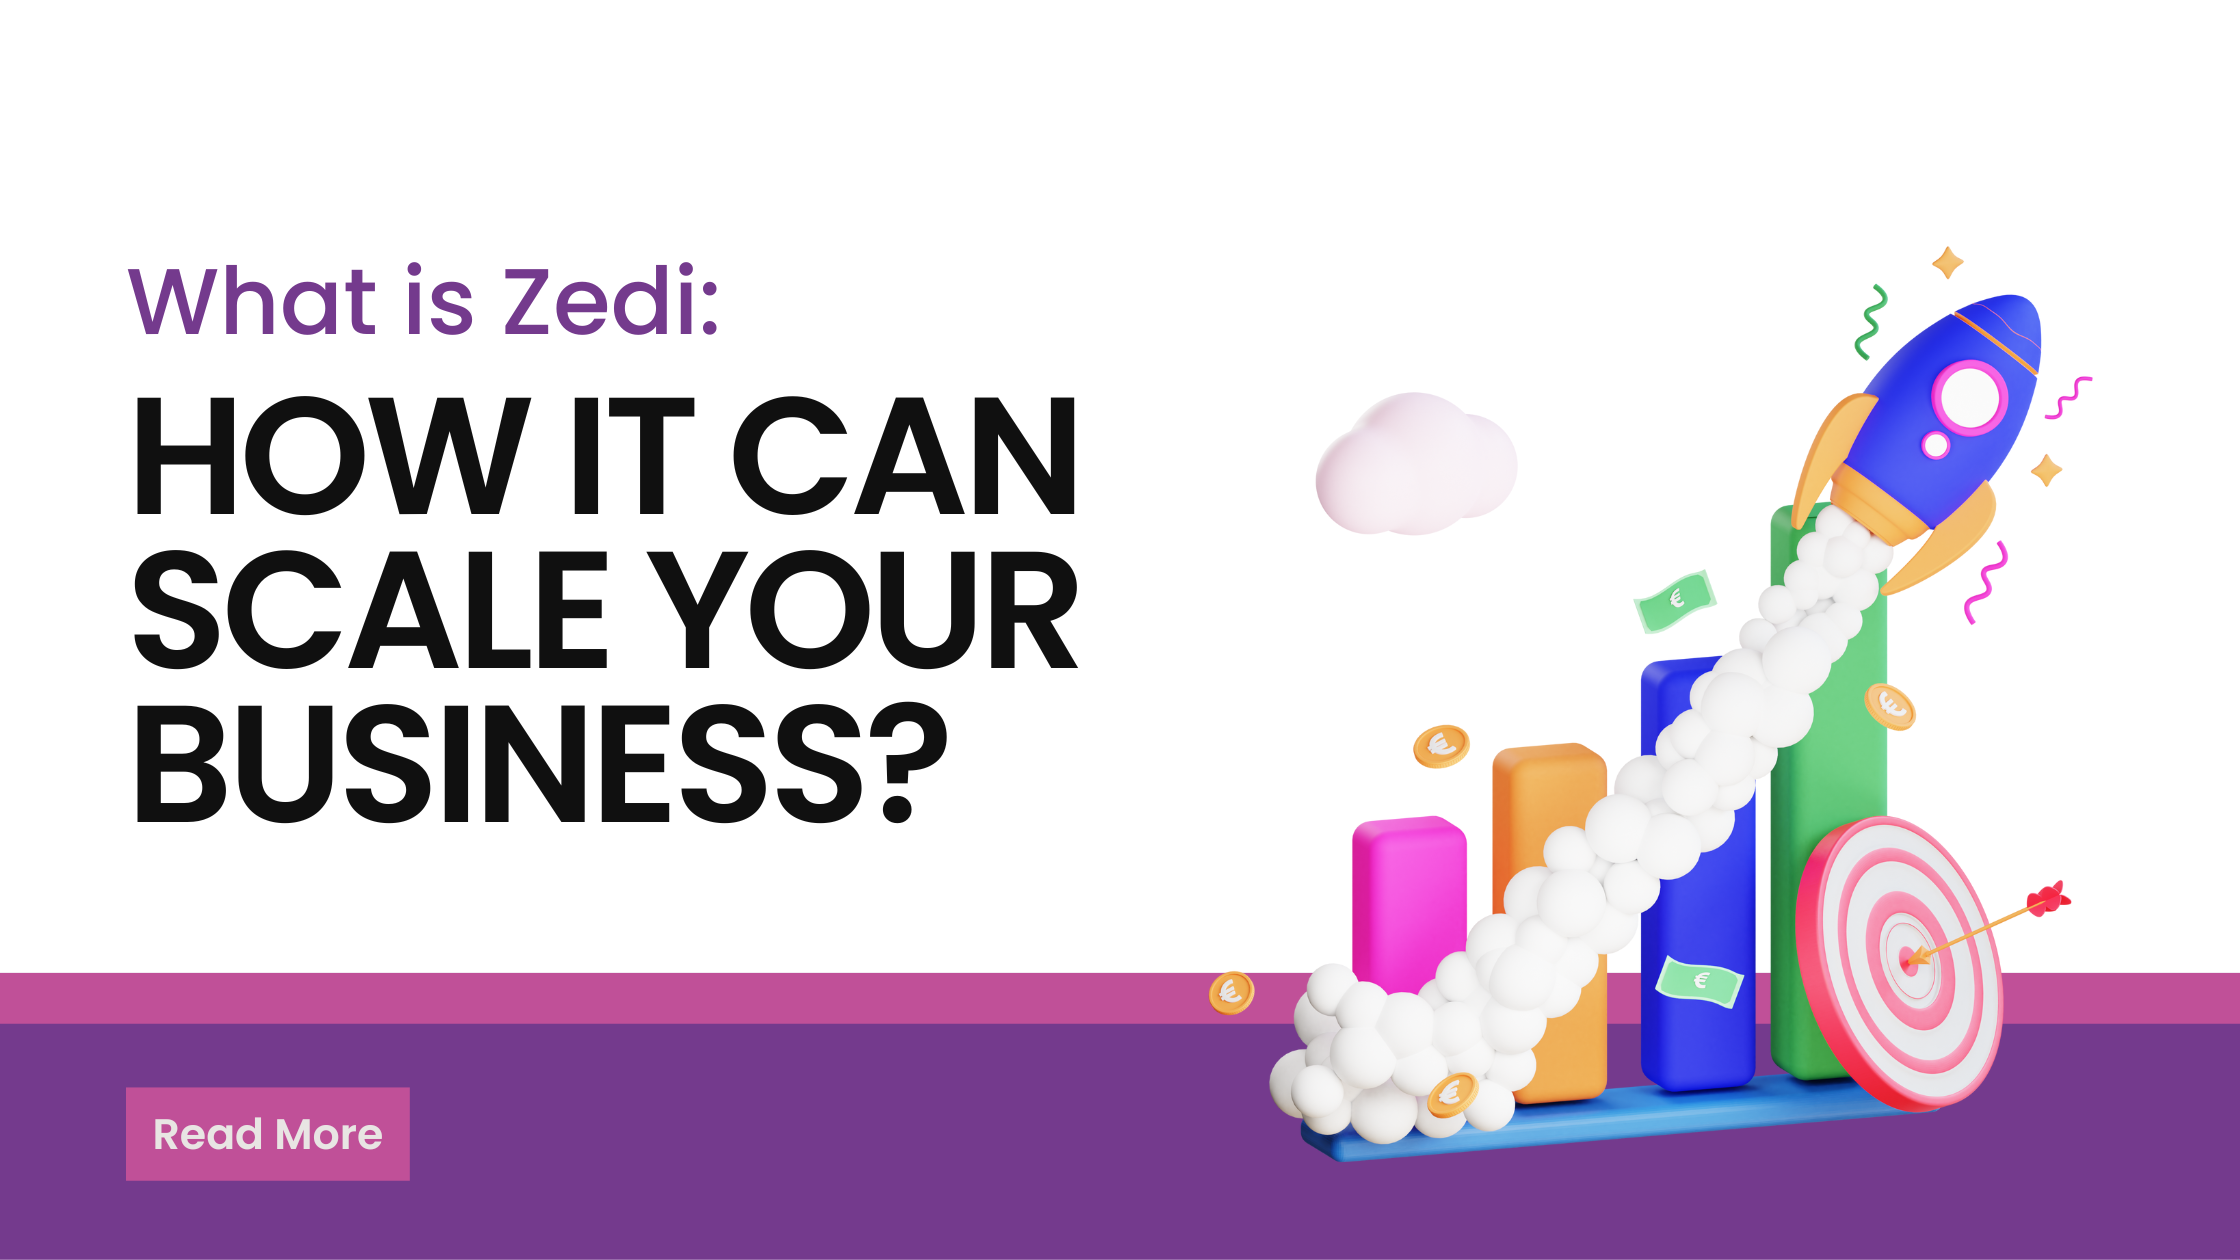 Zedi: Growth company for startups